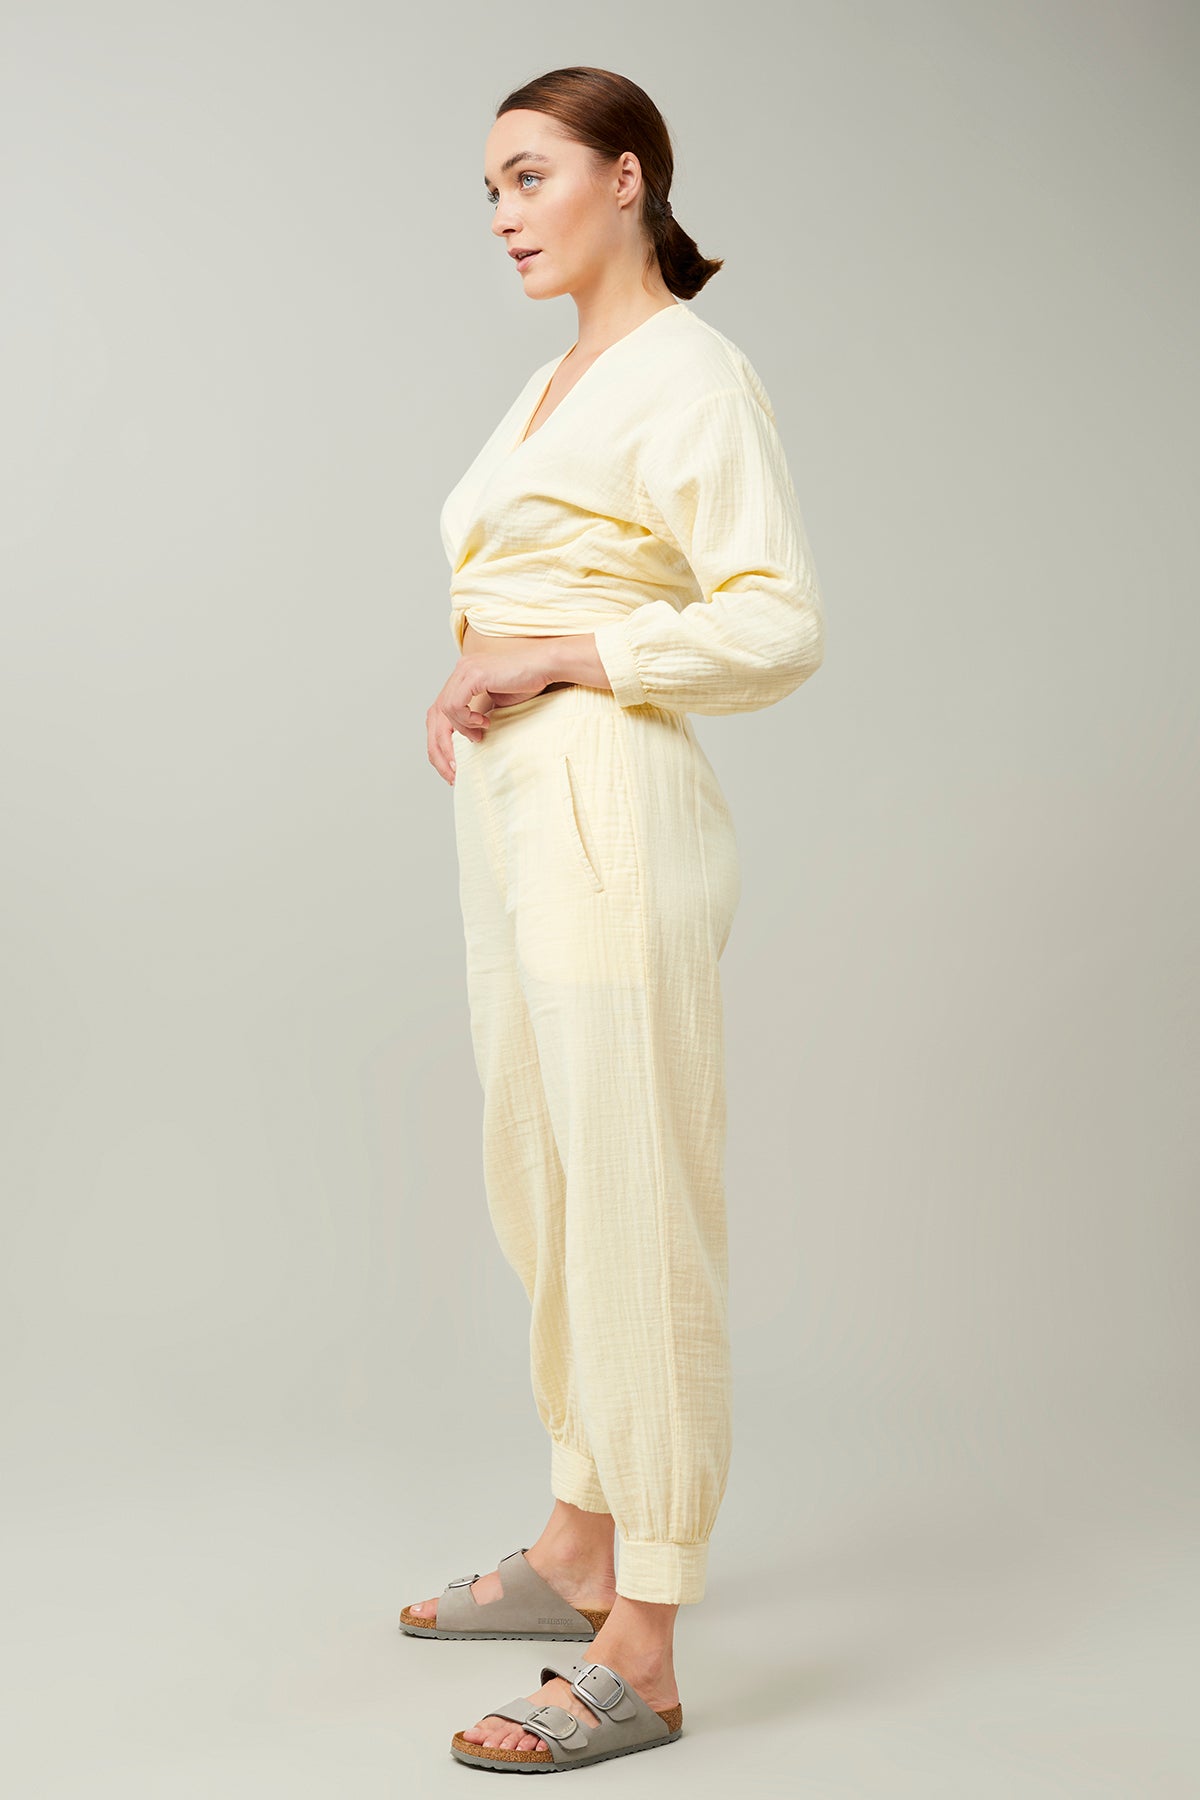 Mandala Yoga Jacke Gelb Outfit Seite - Wrap Top